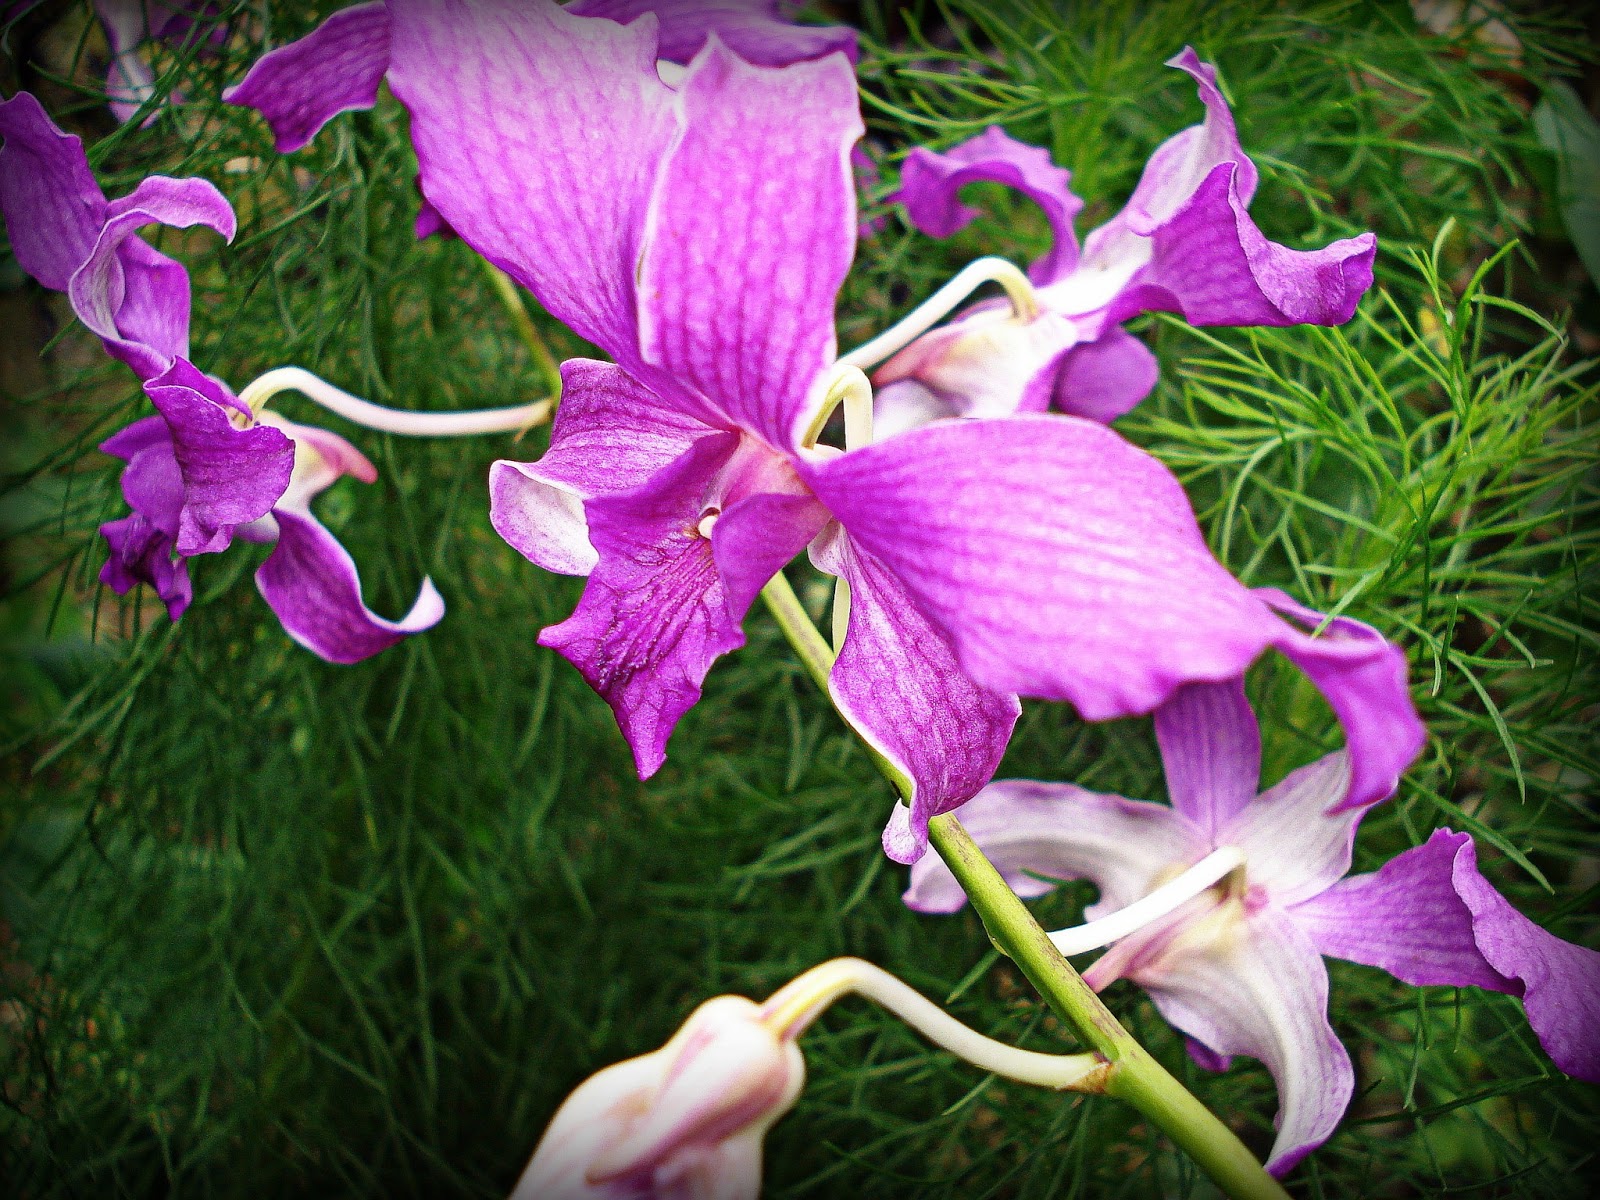 Keindahan Bunga Orkid Desa Relaks Minda